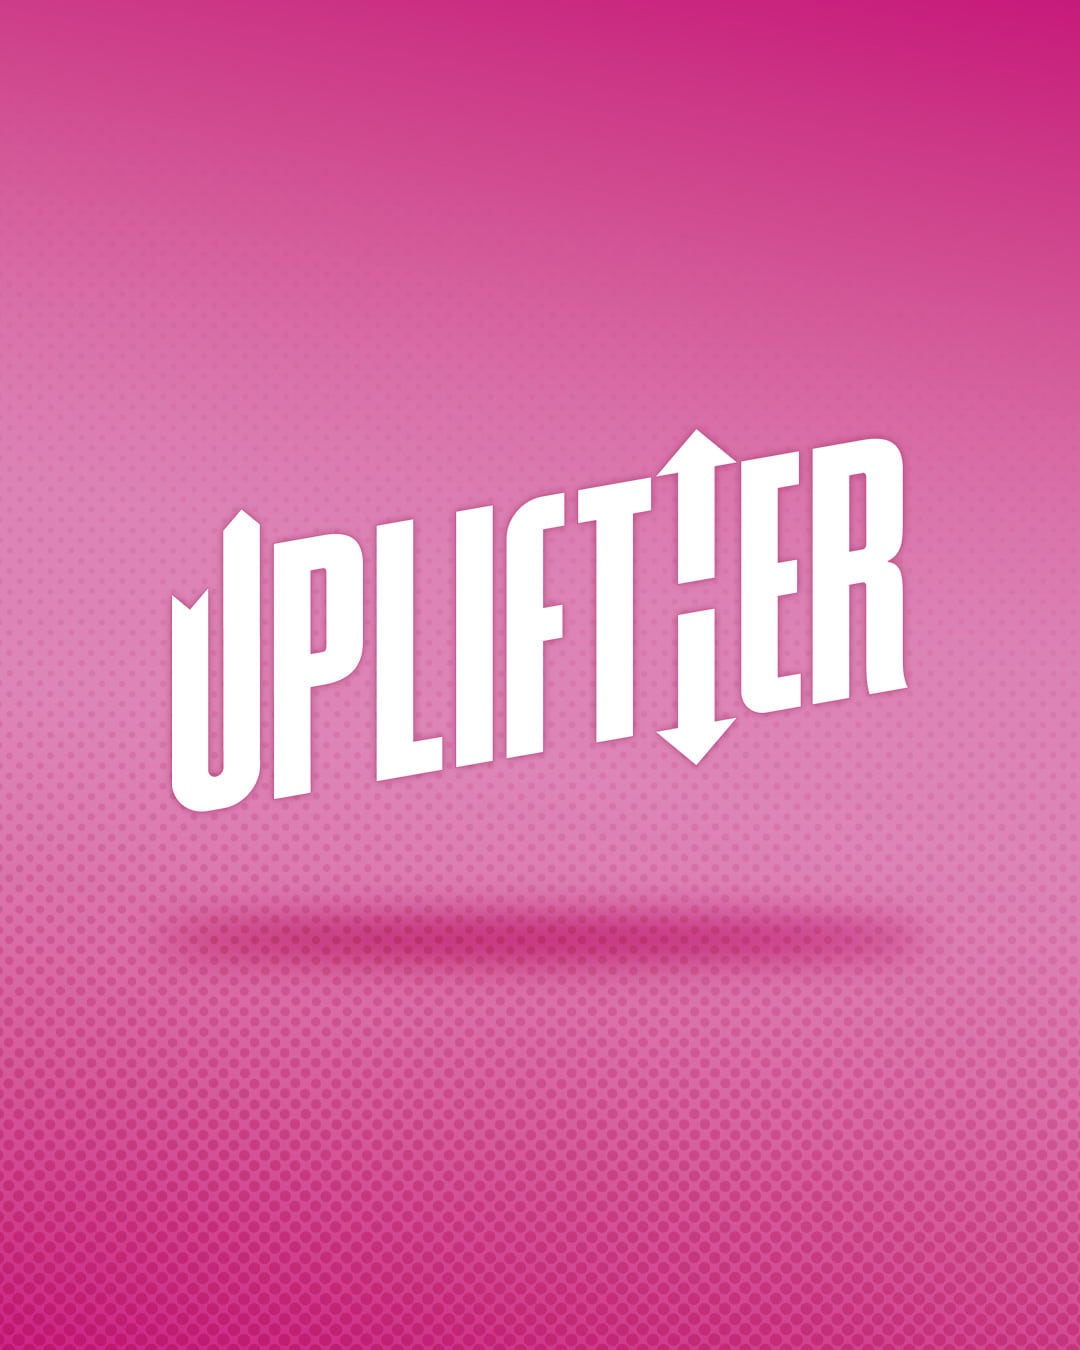 Uplifther logo